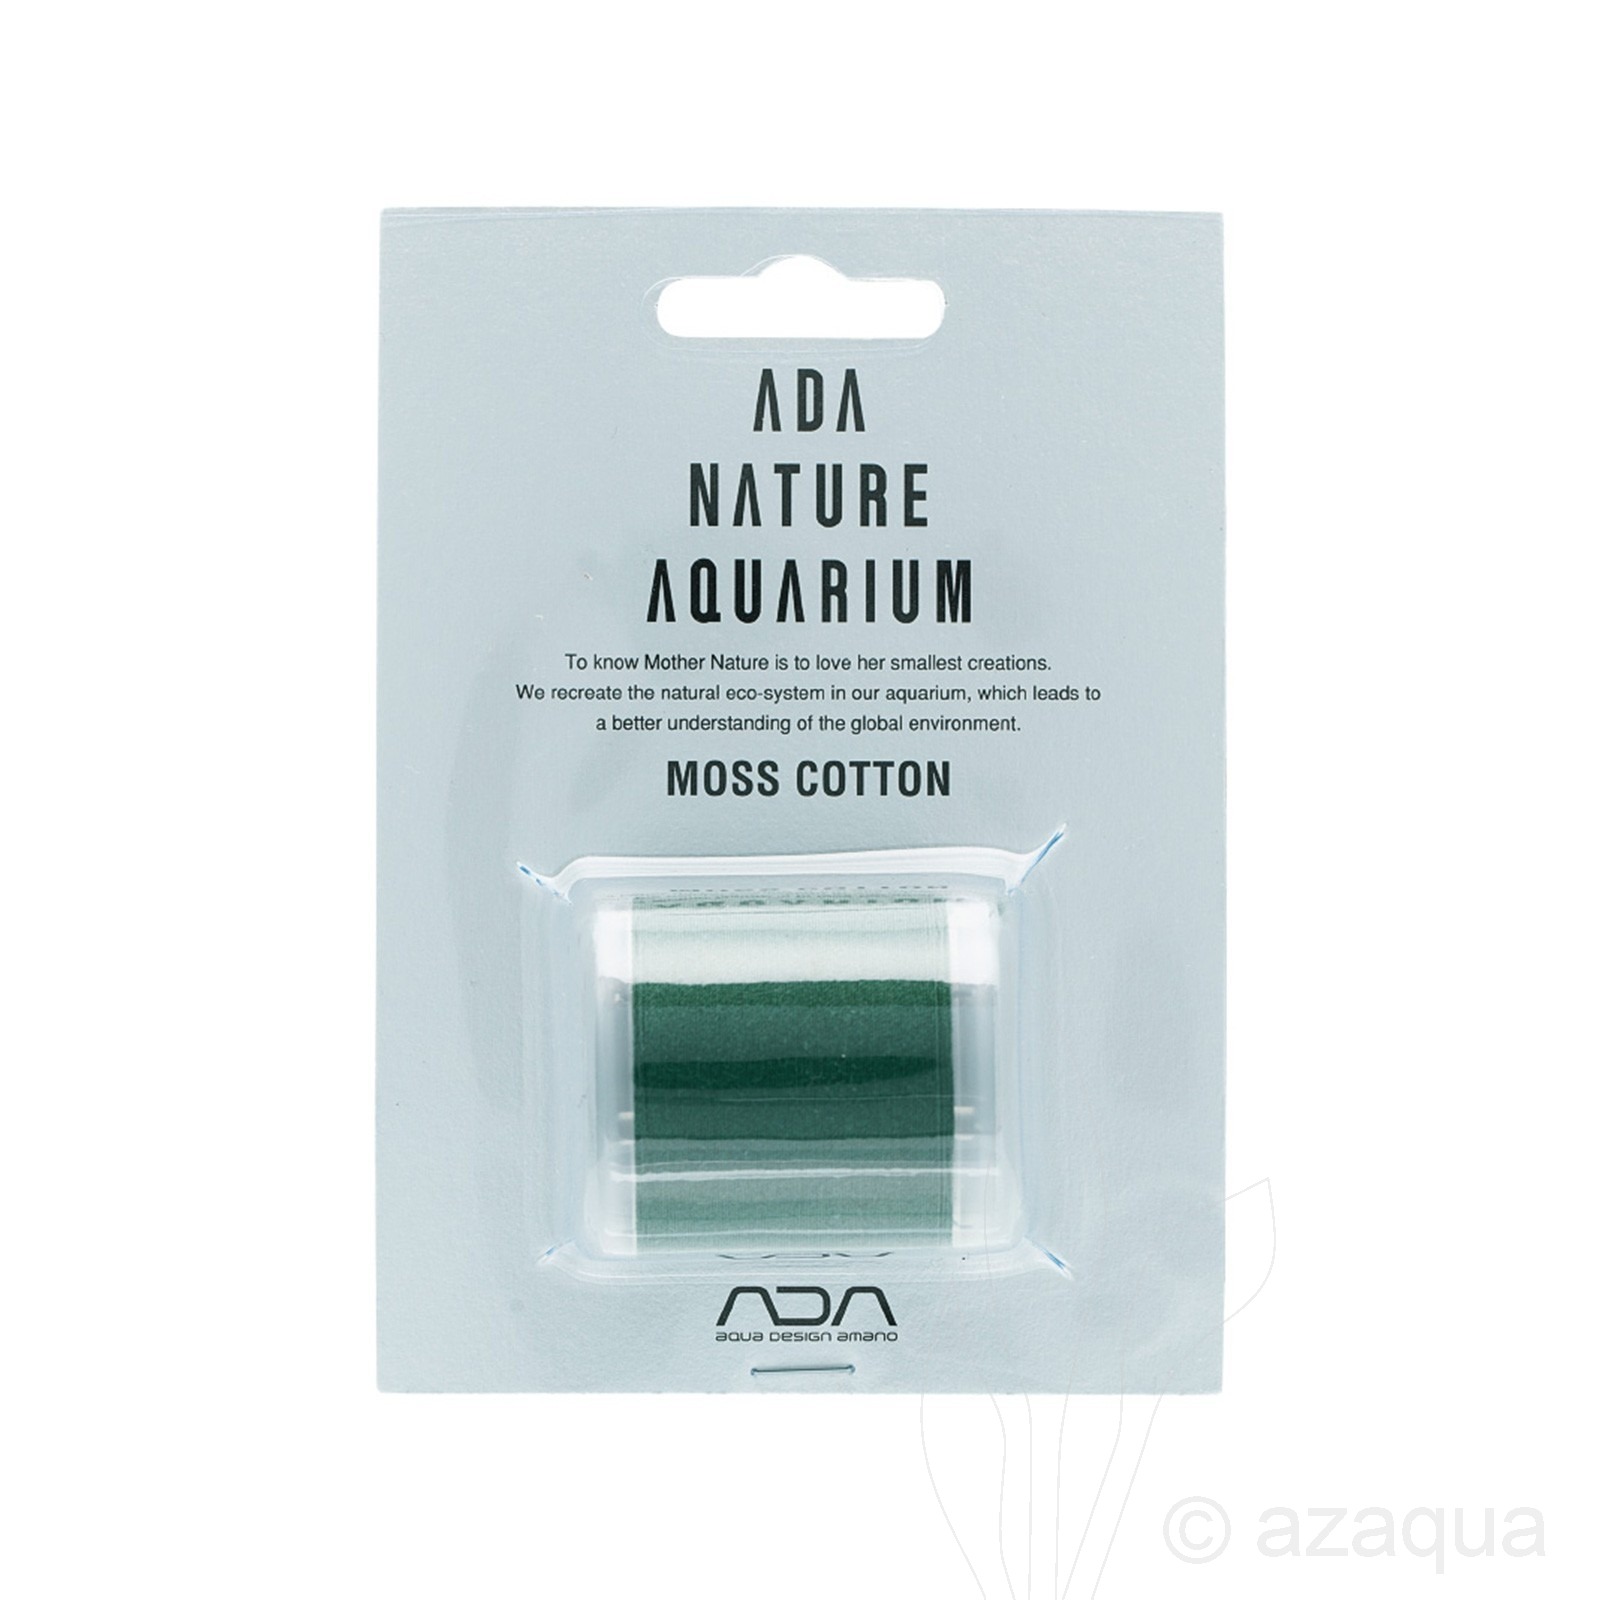 ADA Moss Cotton (200m) - mos vastbinden op hout